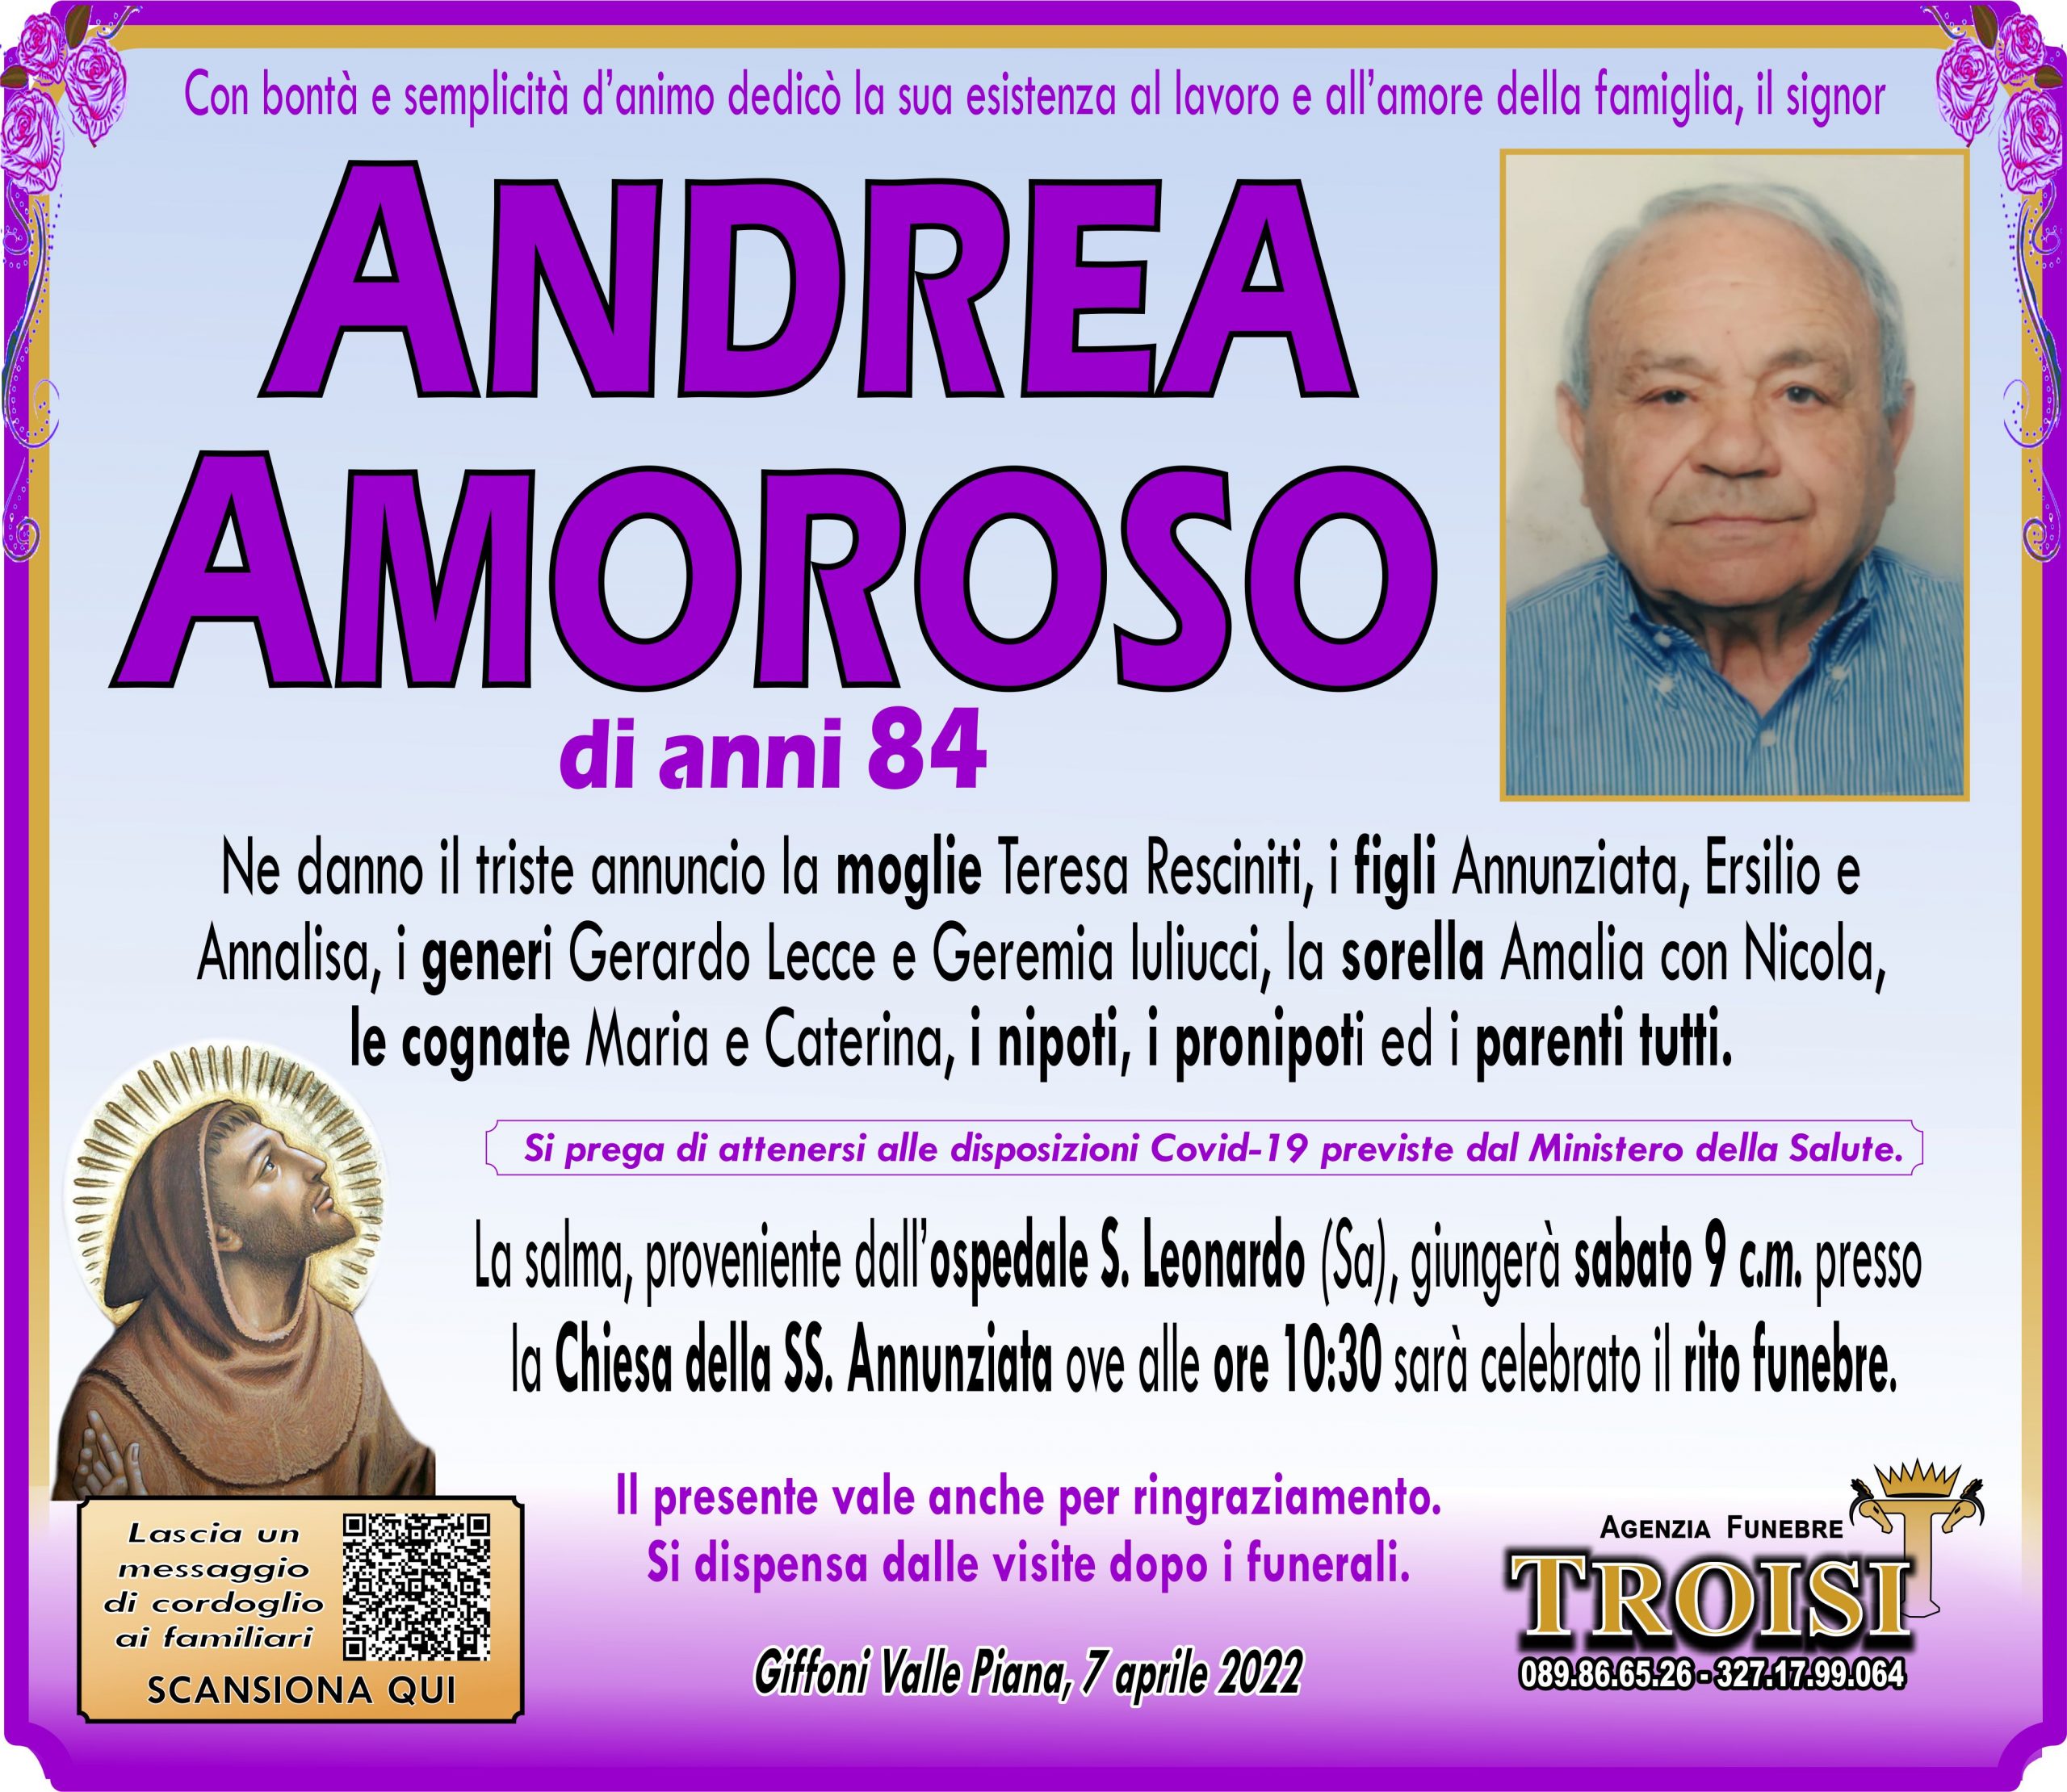 ANDREA AMOROSO